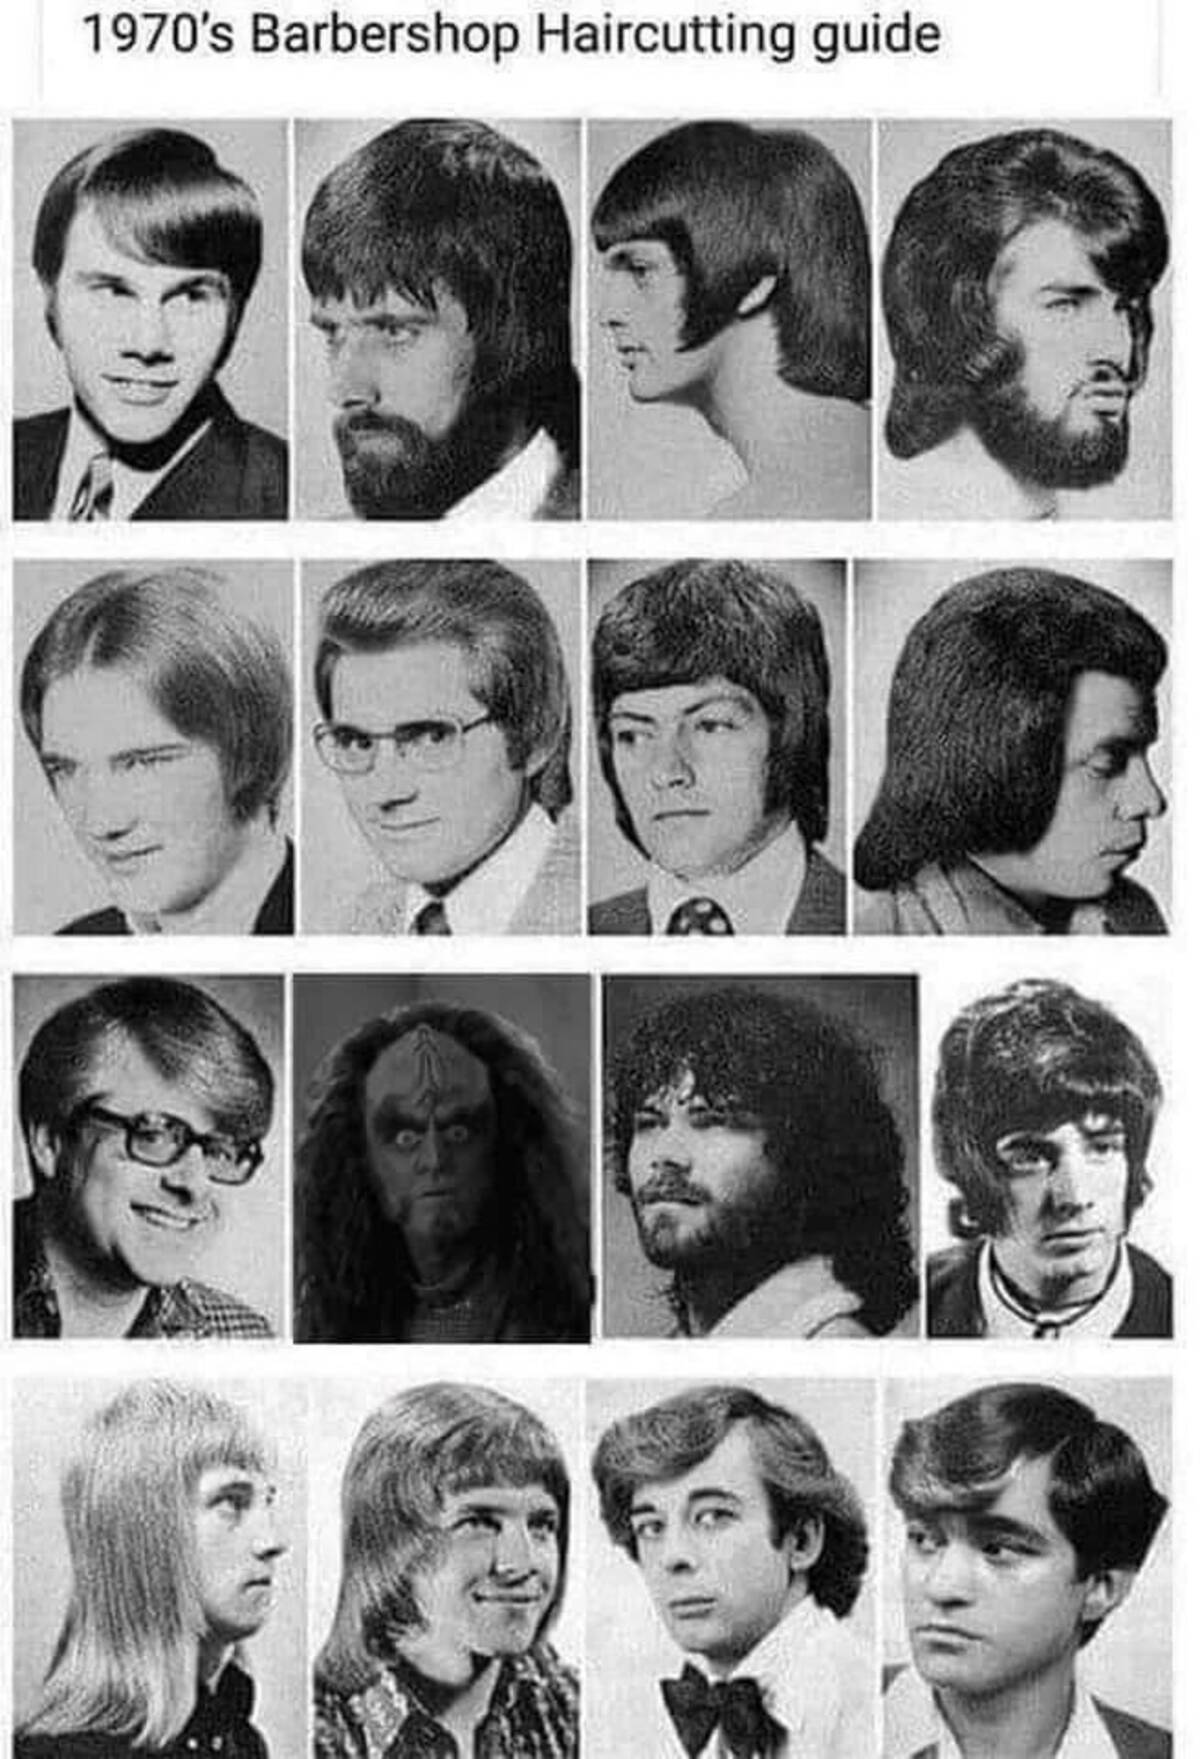 1972 hairstyles men - 1970's Barbershop Haircutting guide